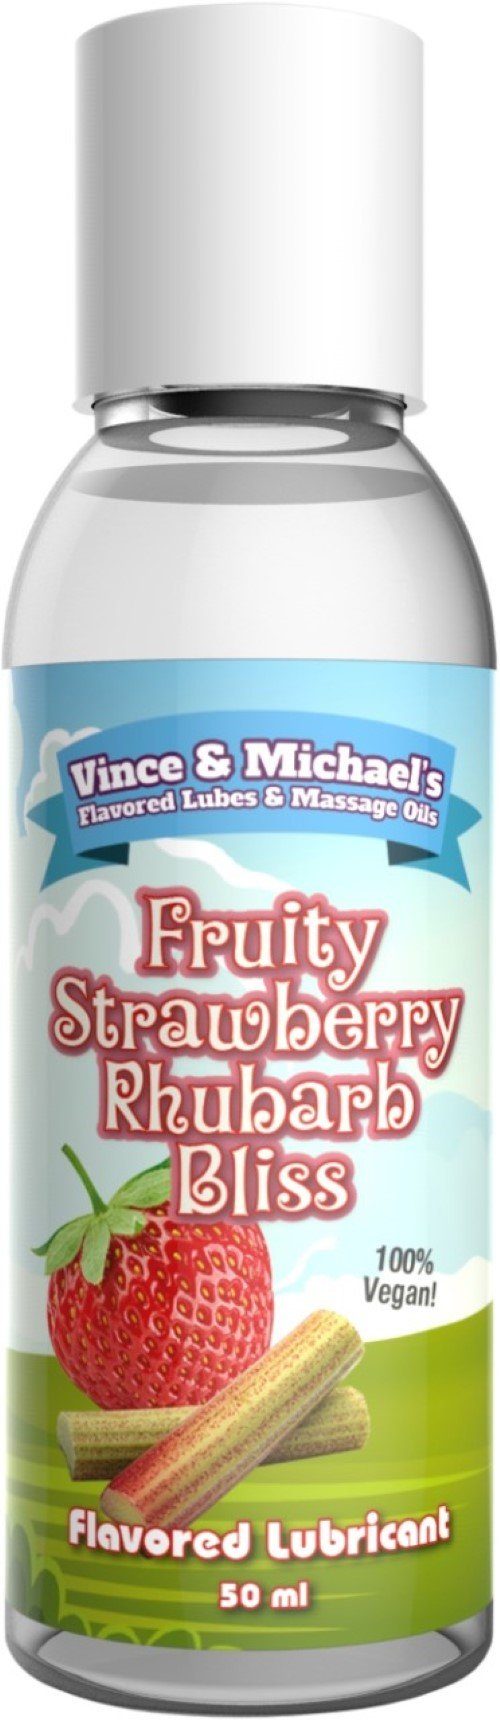 Vince & Michael´s Gleitgel 50 ml - VINCE & MICHAEL's Fruity Strawberry Rhubarb Bliss 50ml